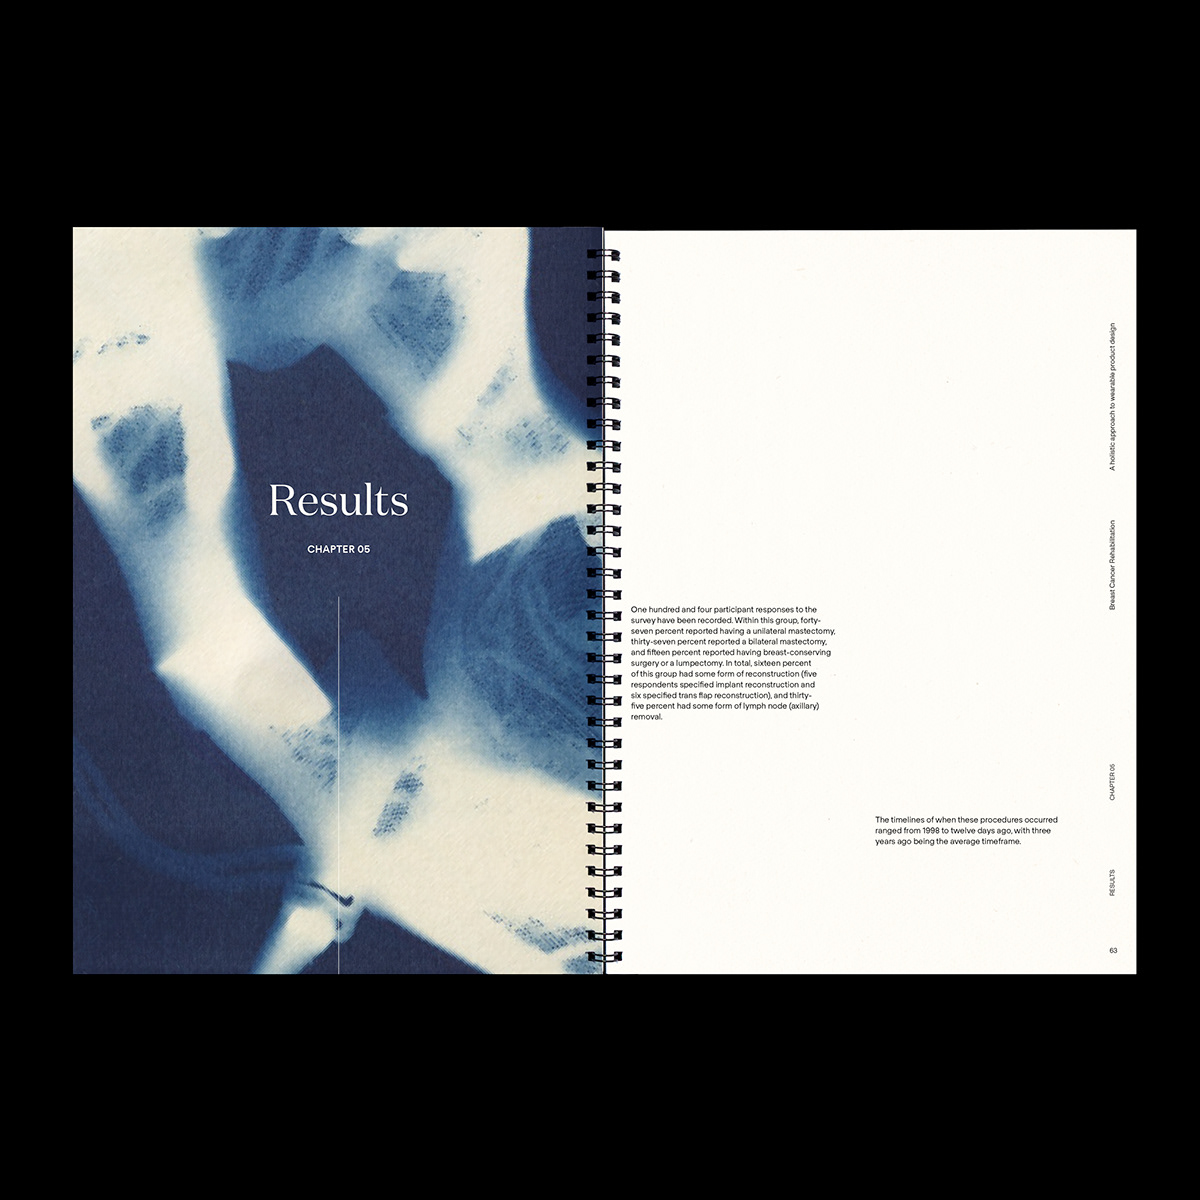 Layout editorial design visual identity brand print magazine InDesign book